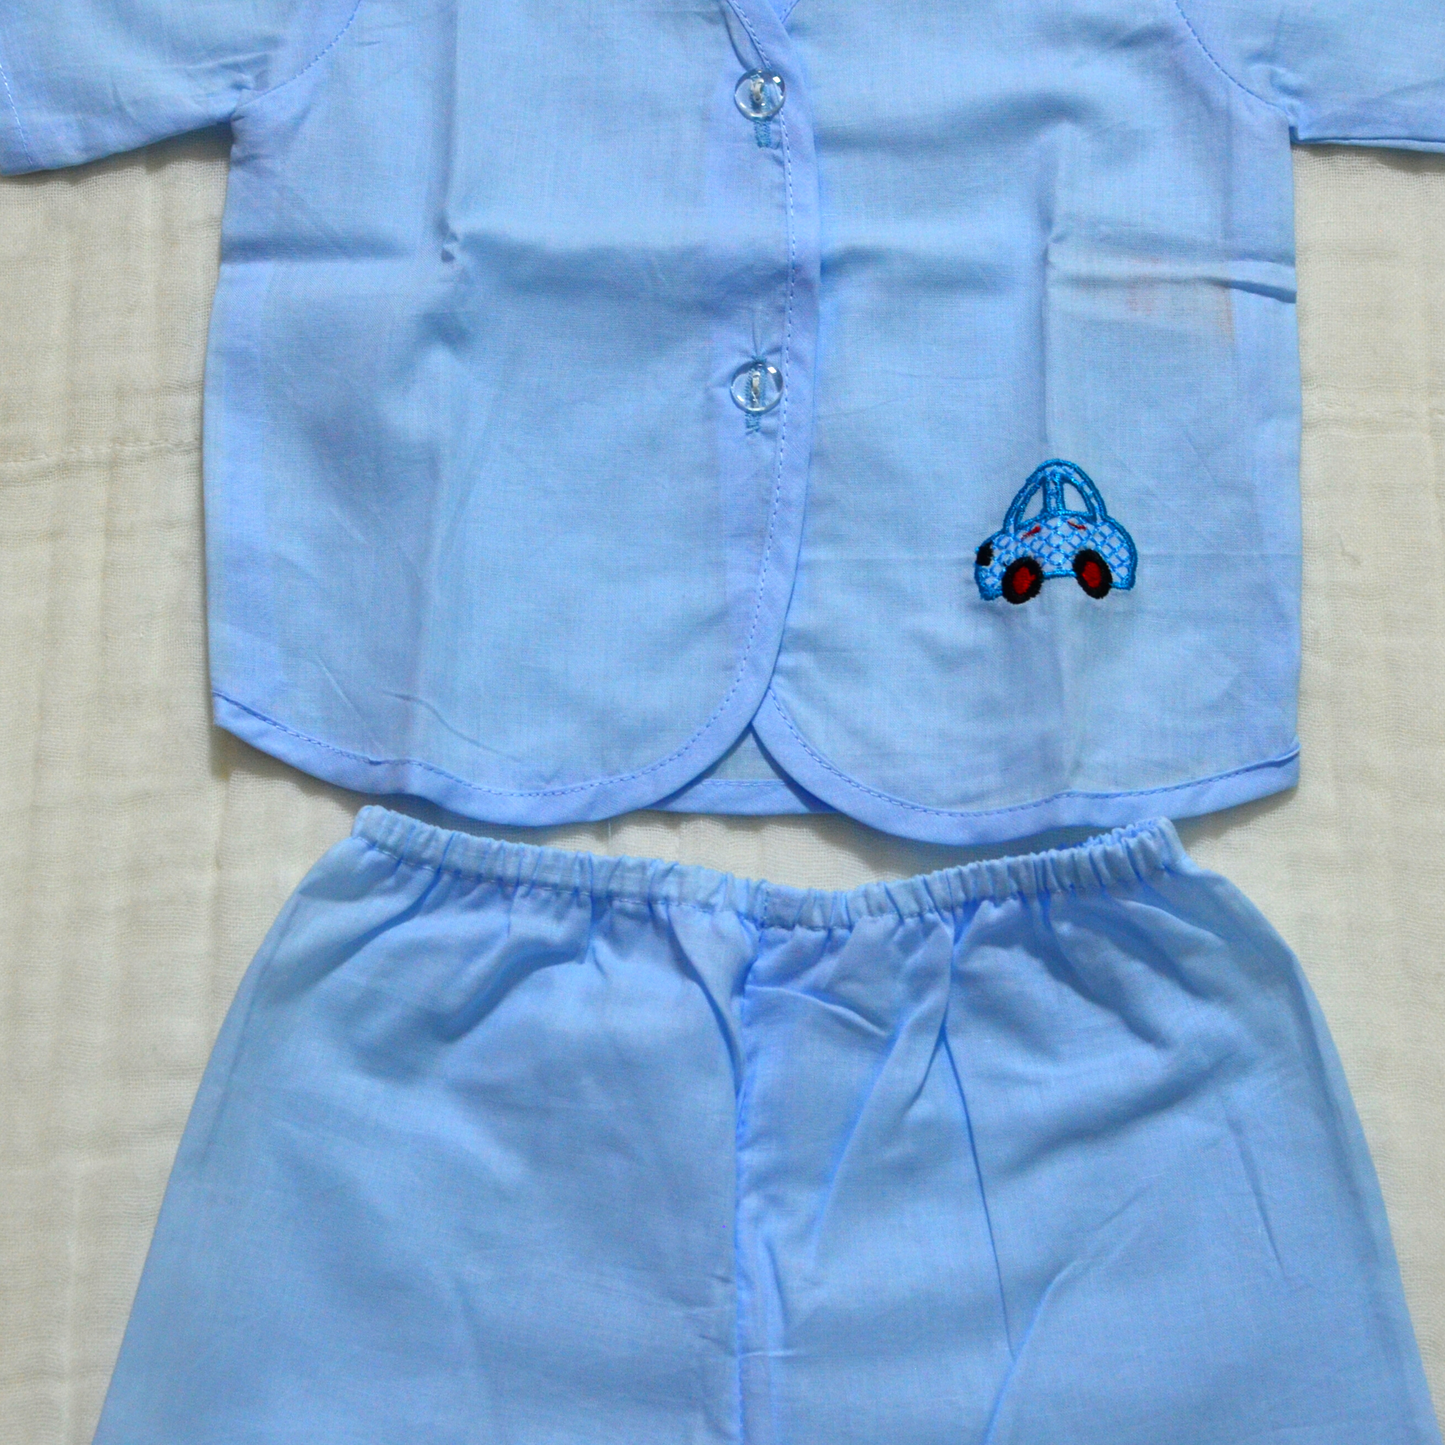 Cotton Baby Suit - Take Home - Newborn